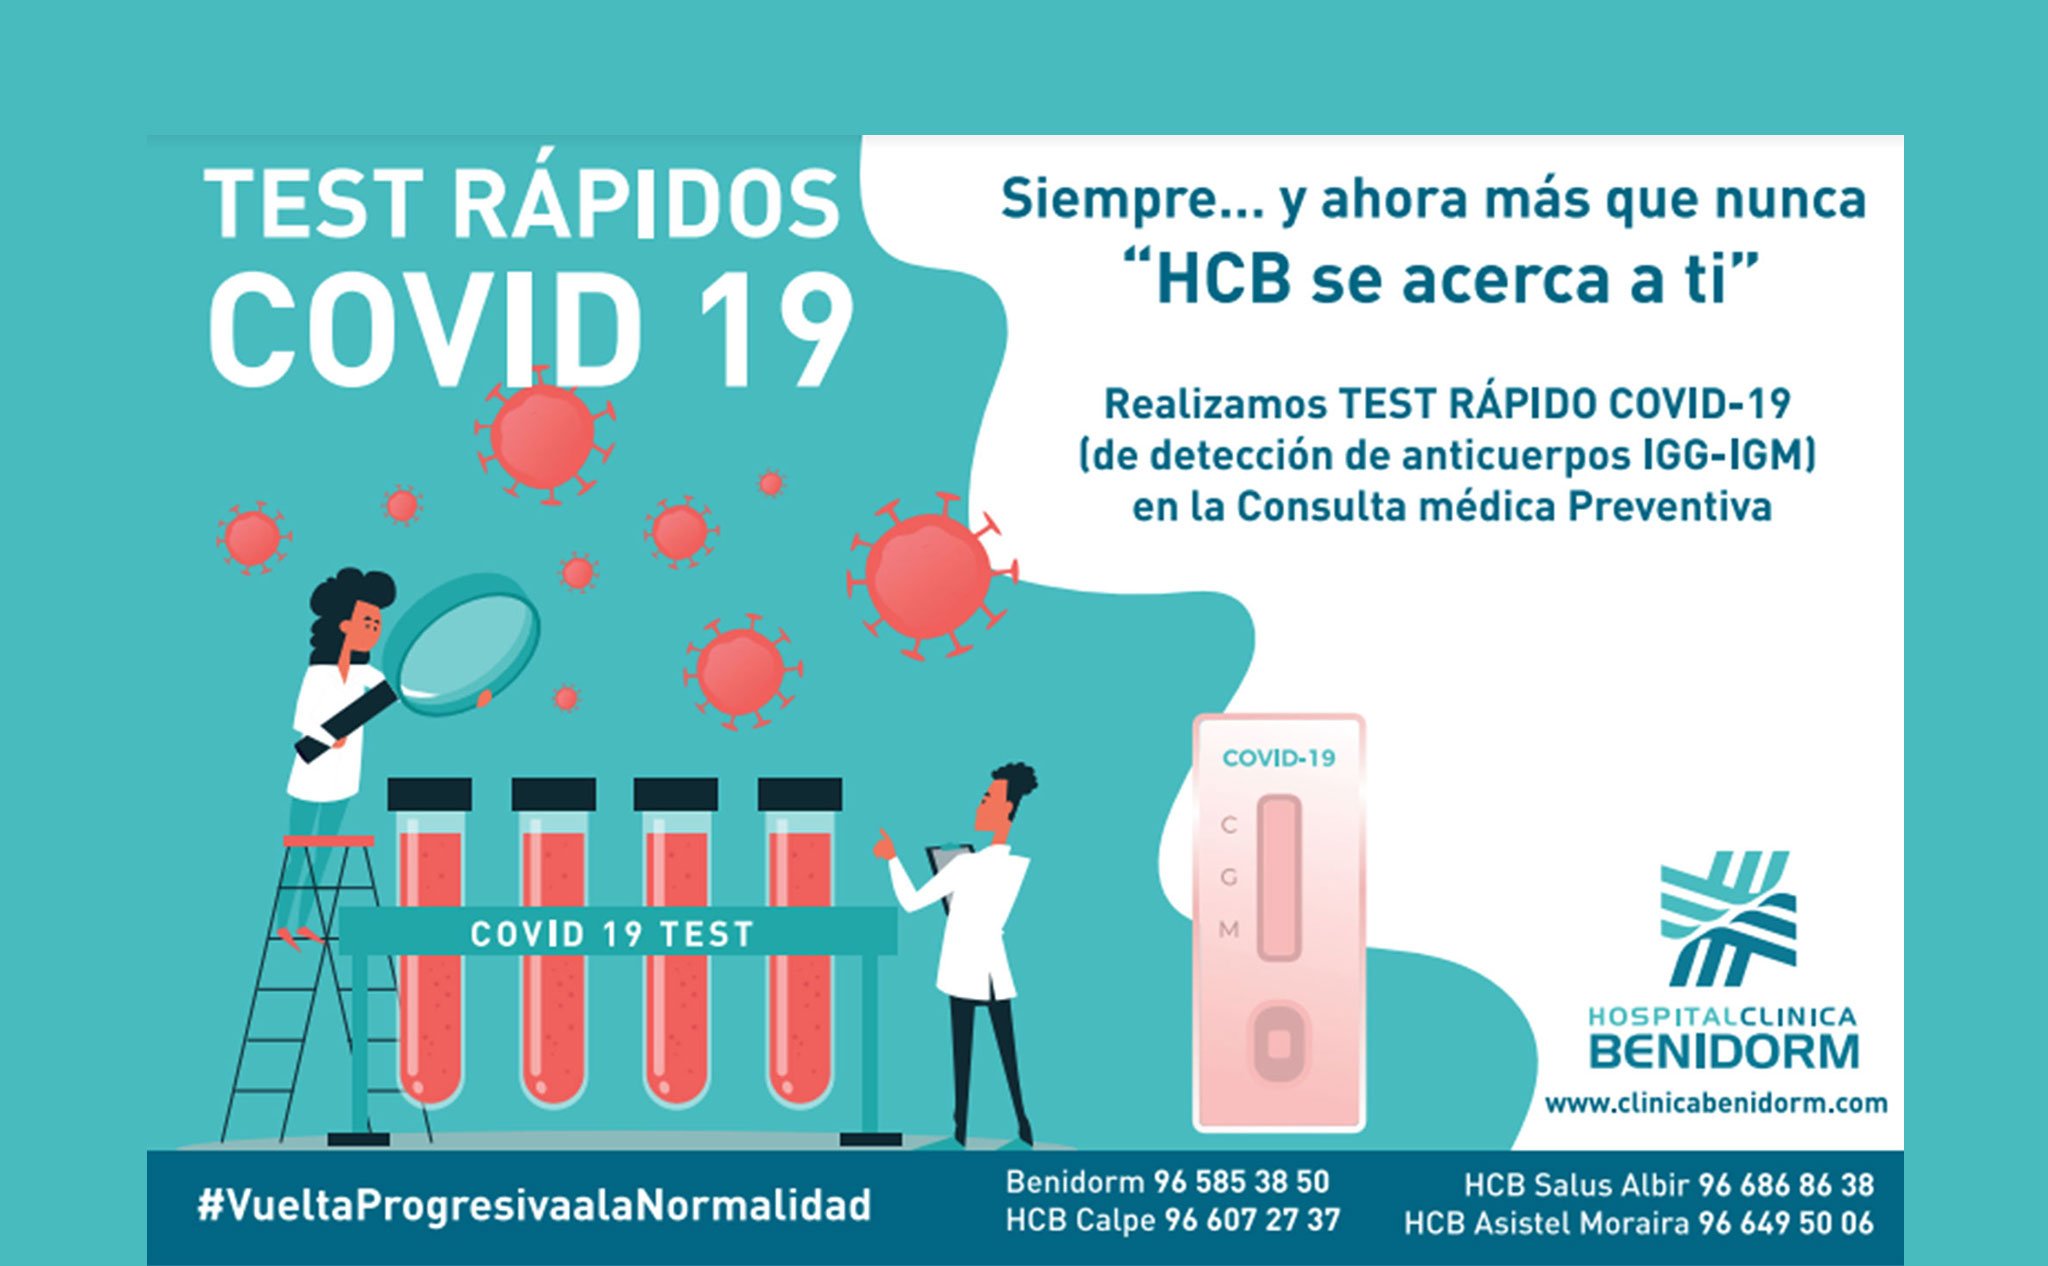 Realízate un test rápido COVID-19 en Hospital Clínica Benidorm (HCB)